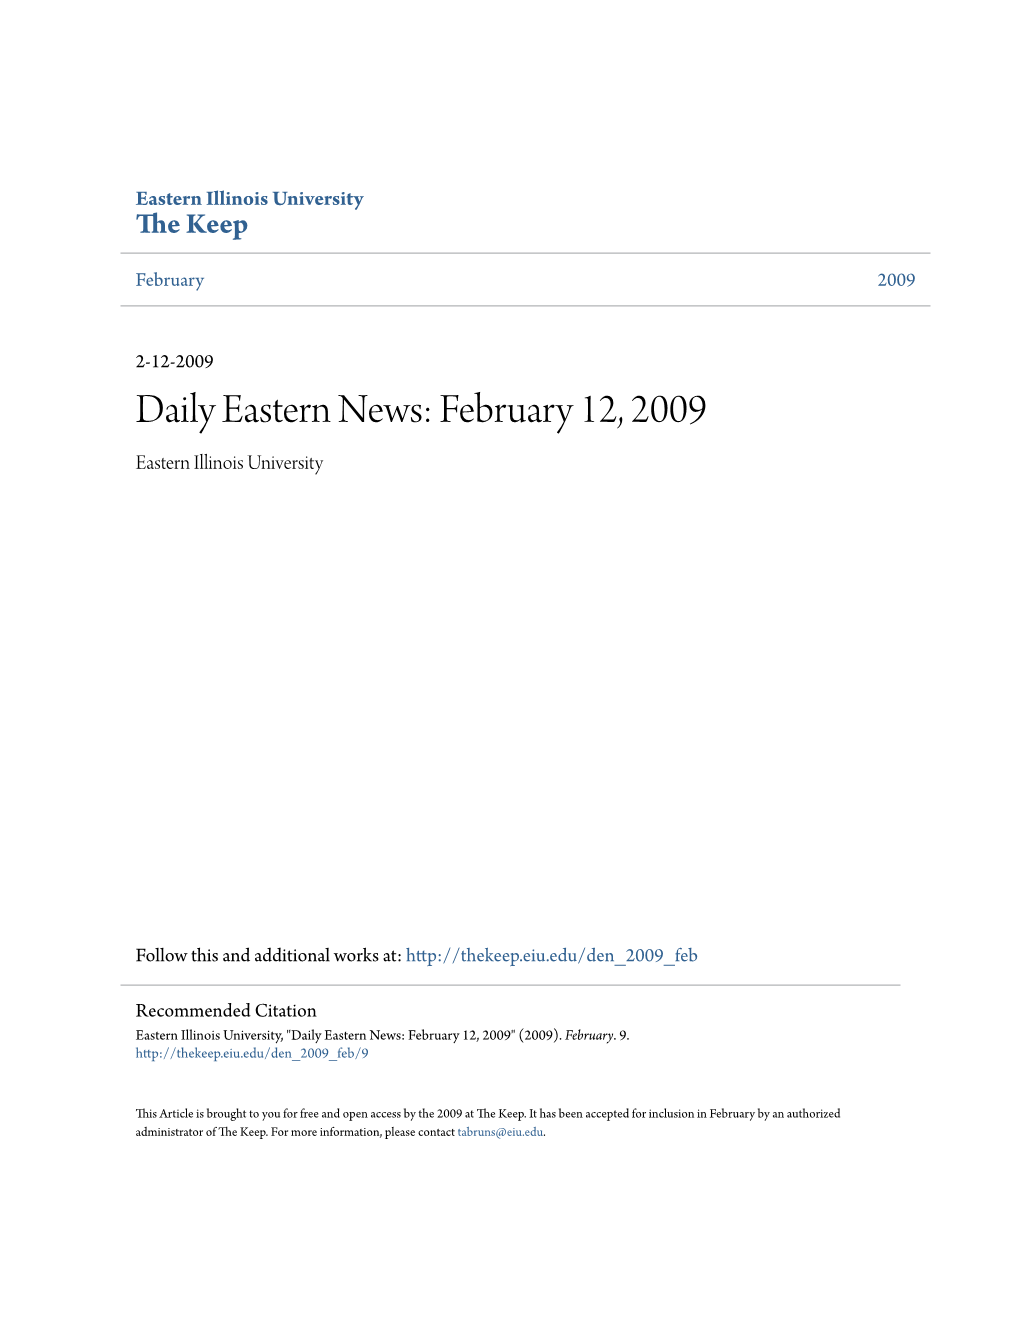 The DAILY EASTERN NEWS Thursday, February 12, 2009 VOL